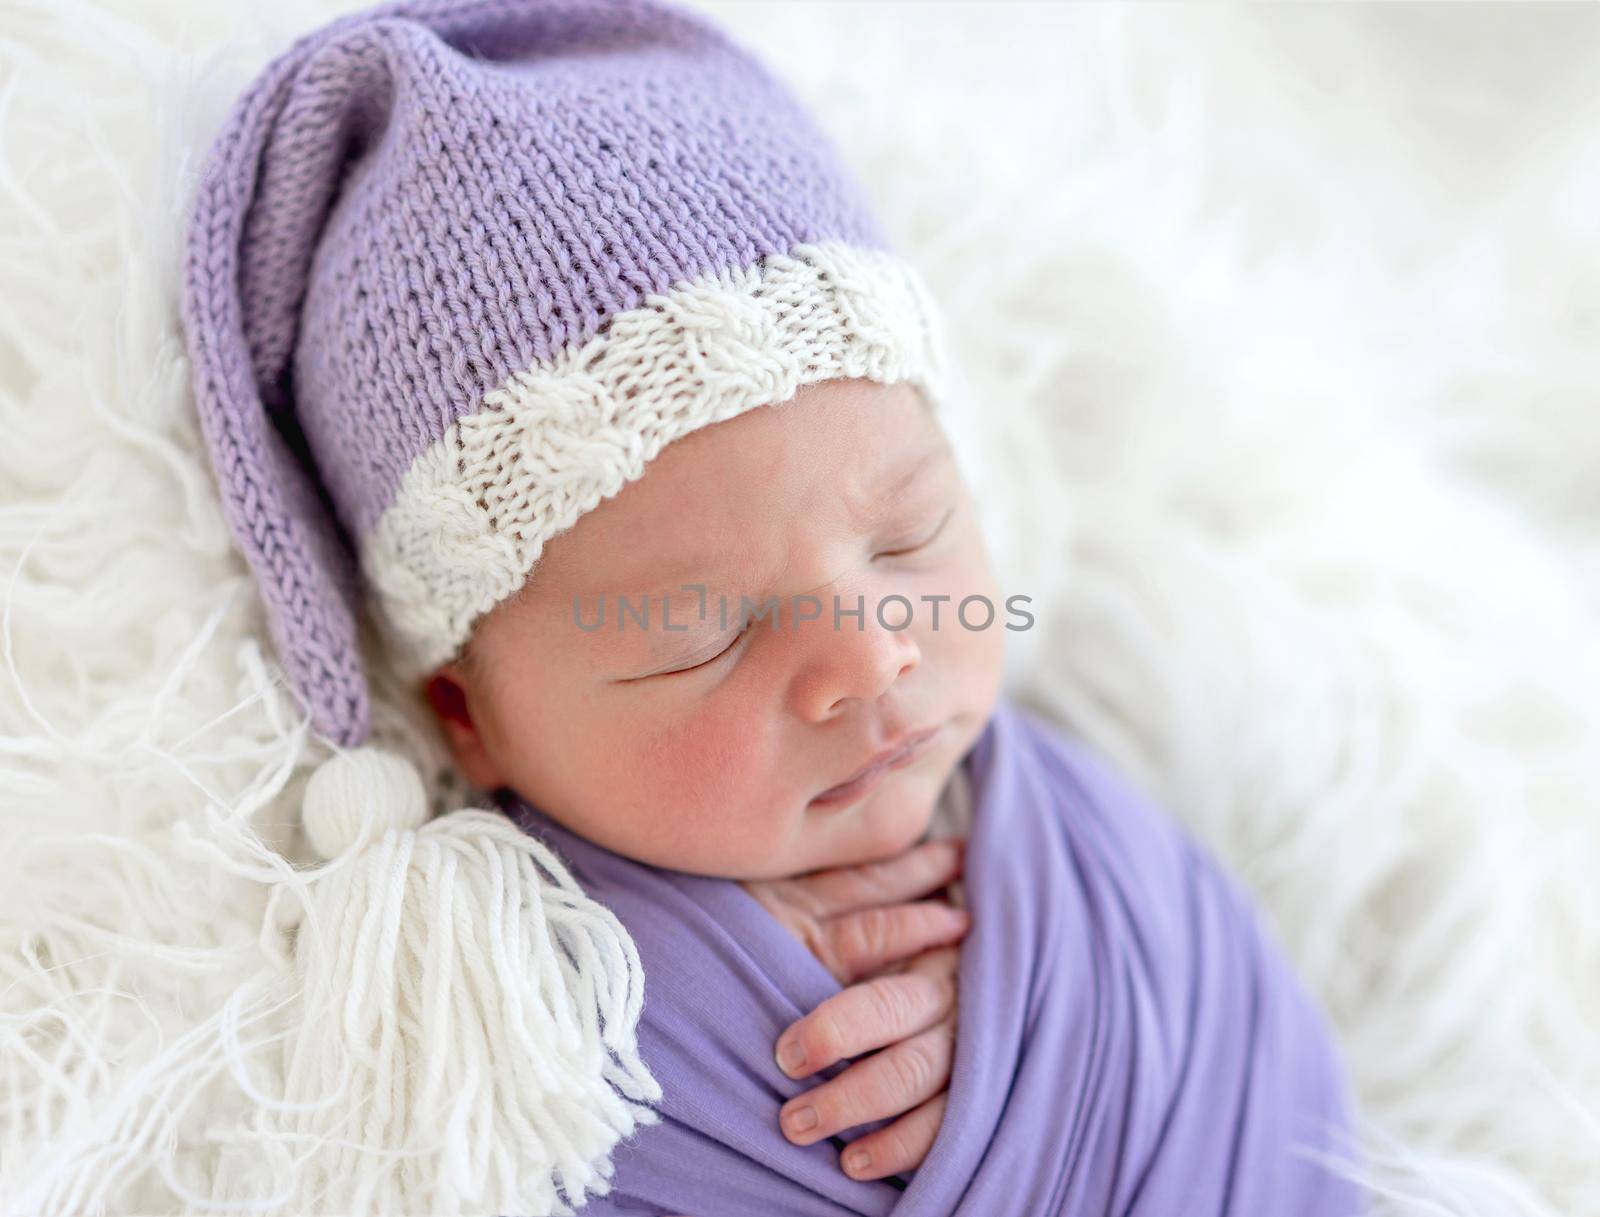 Cute newborn in knitted hat sleeping